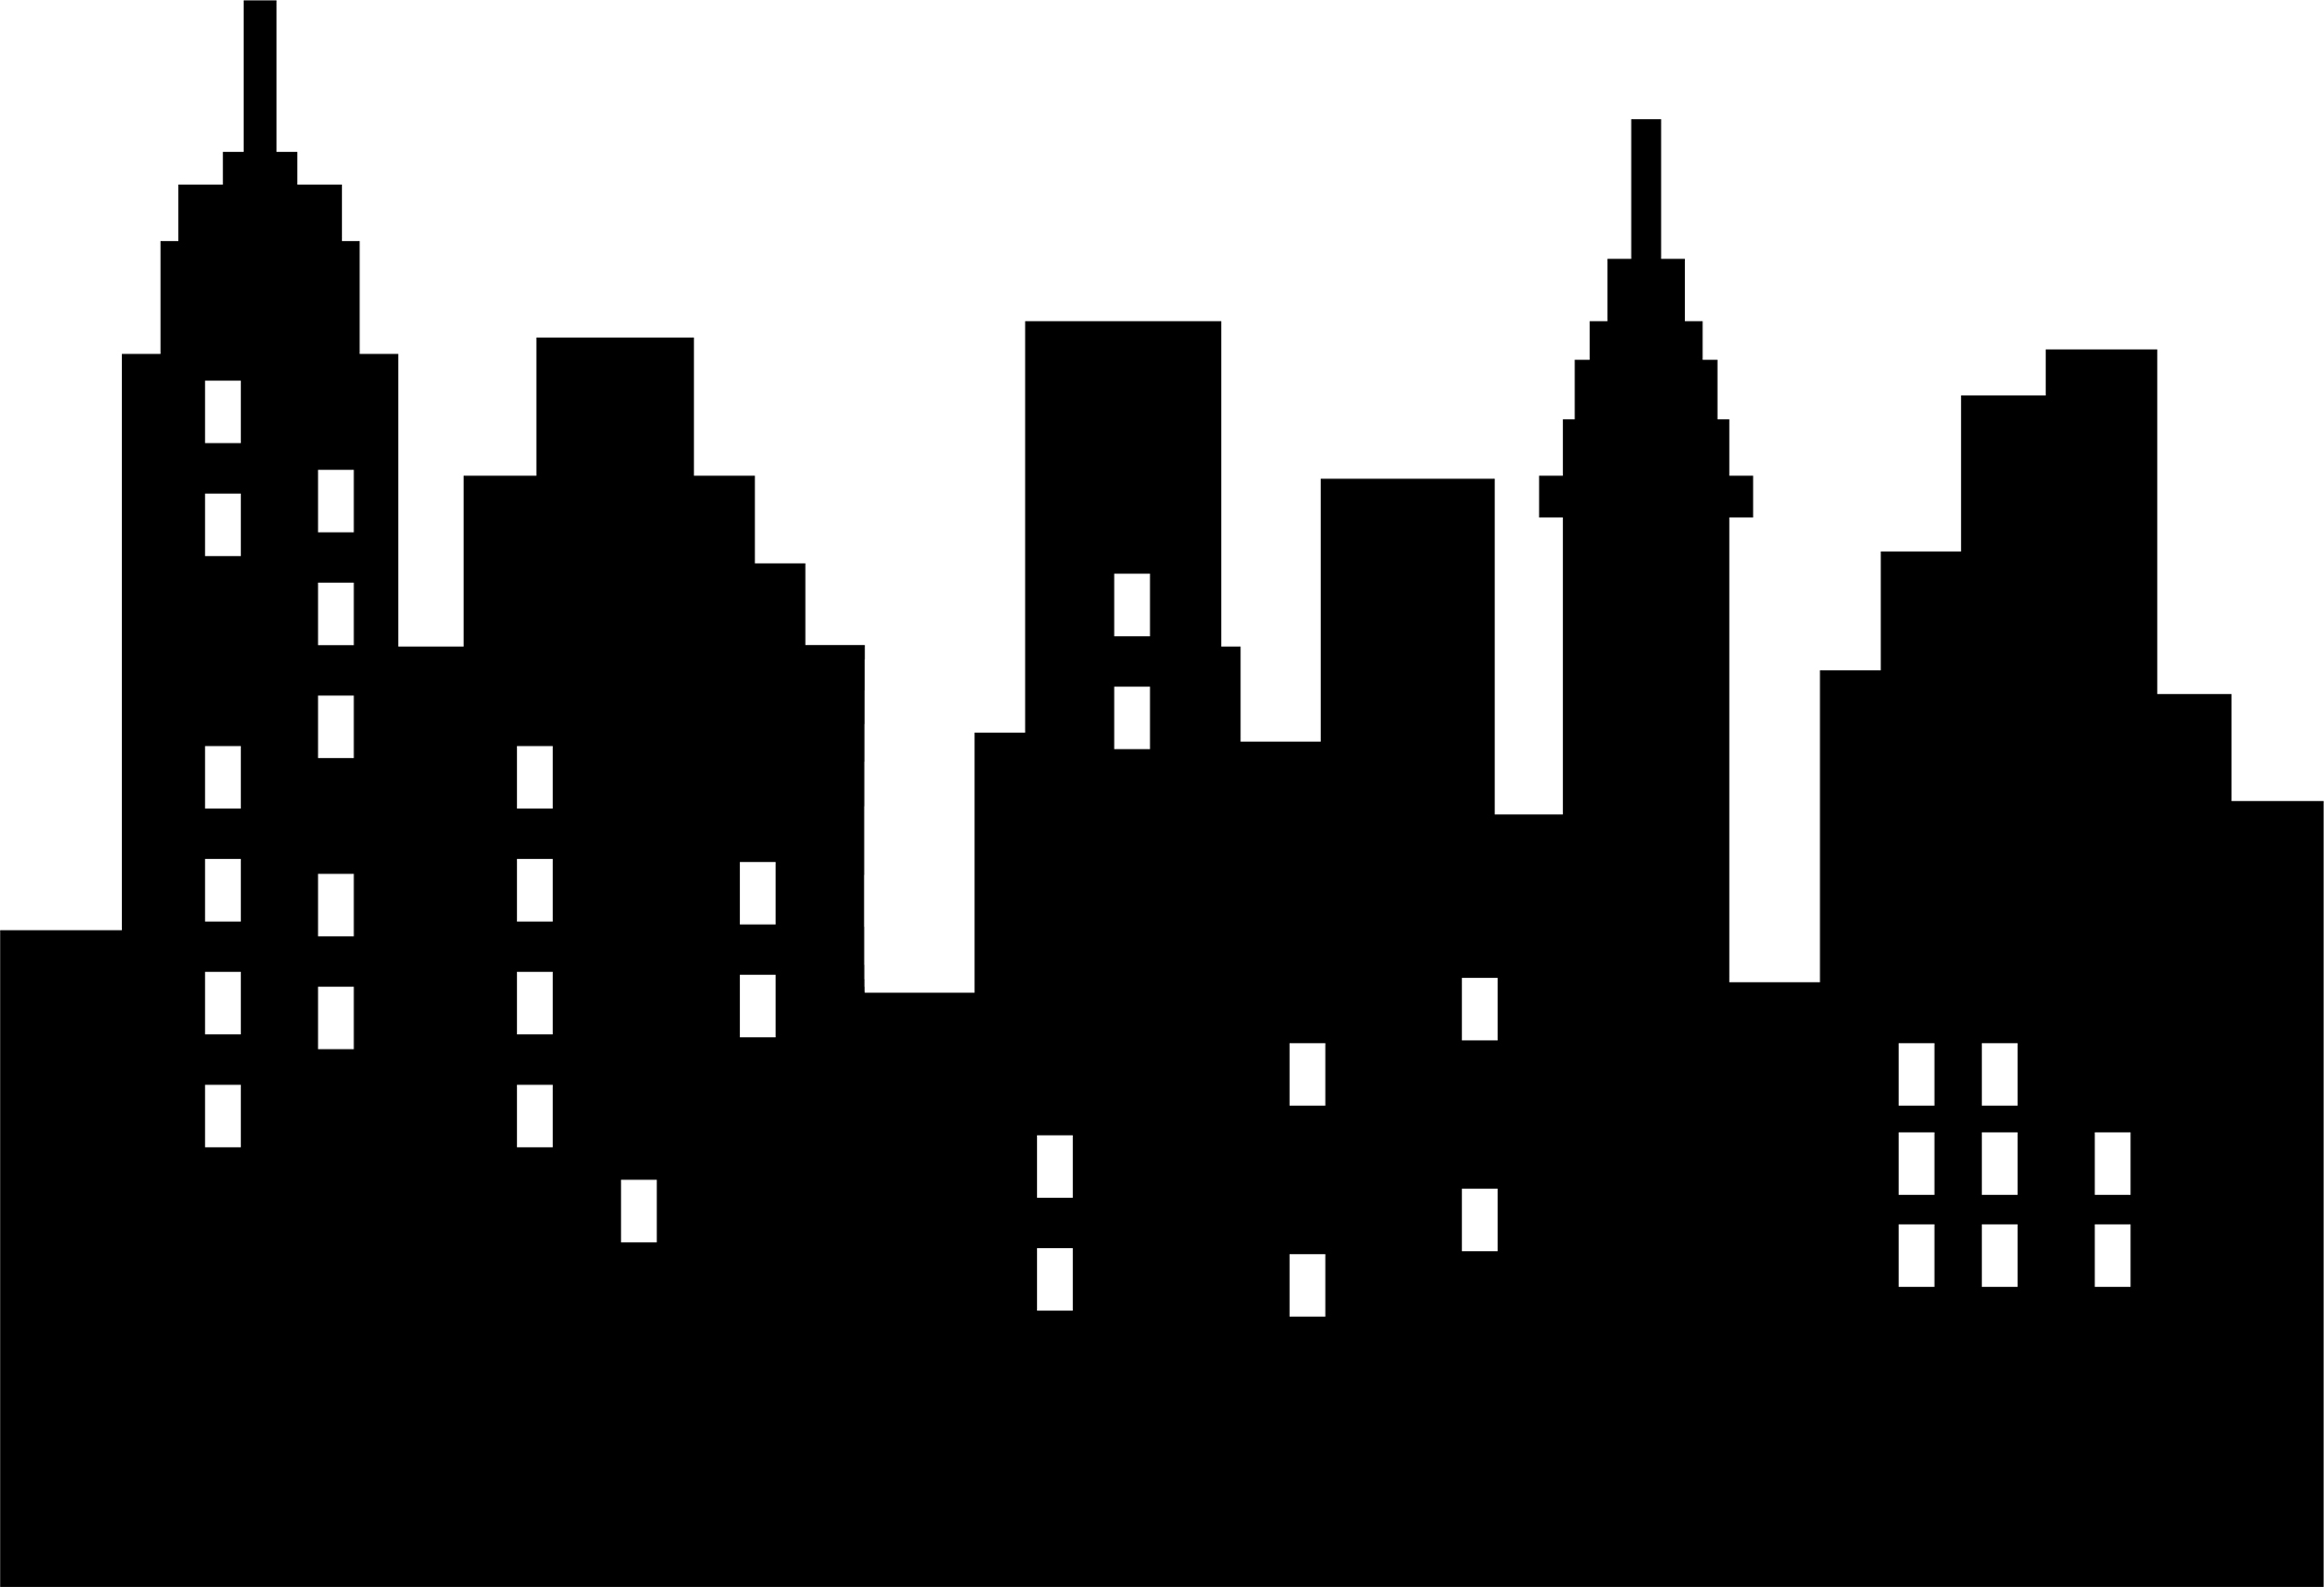 city silhouette clip art